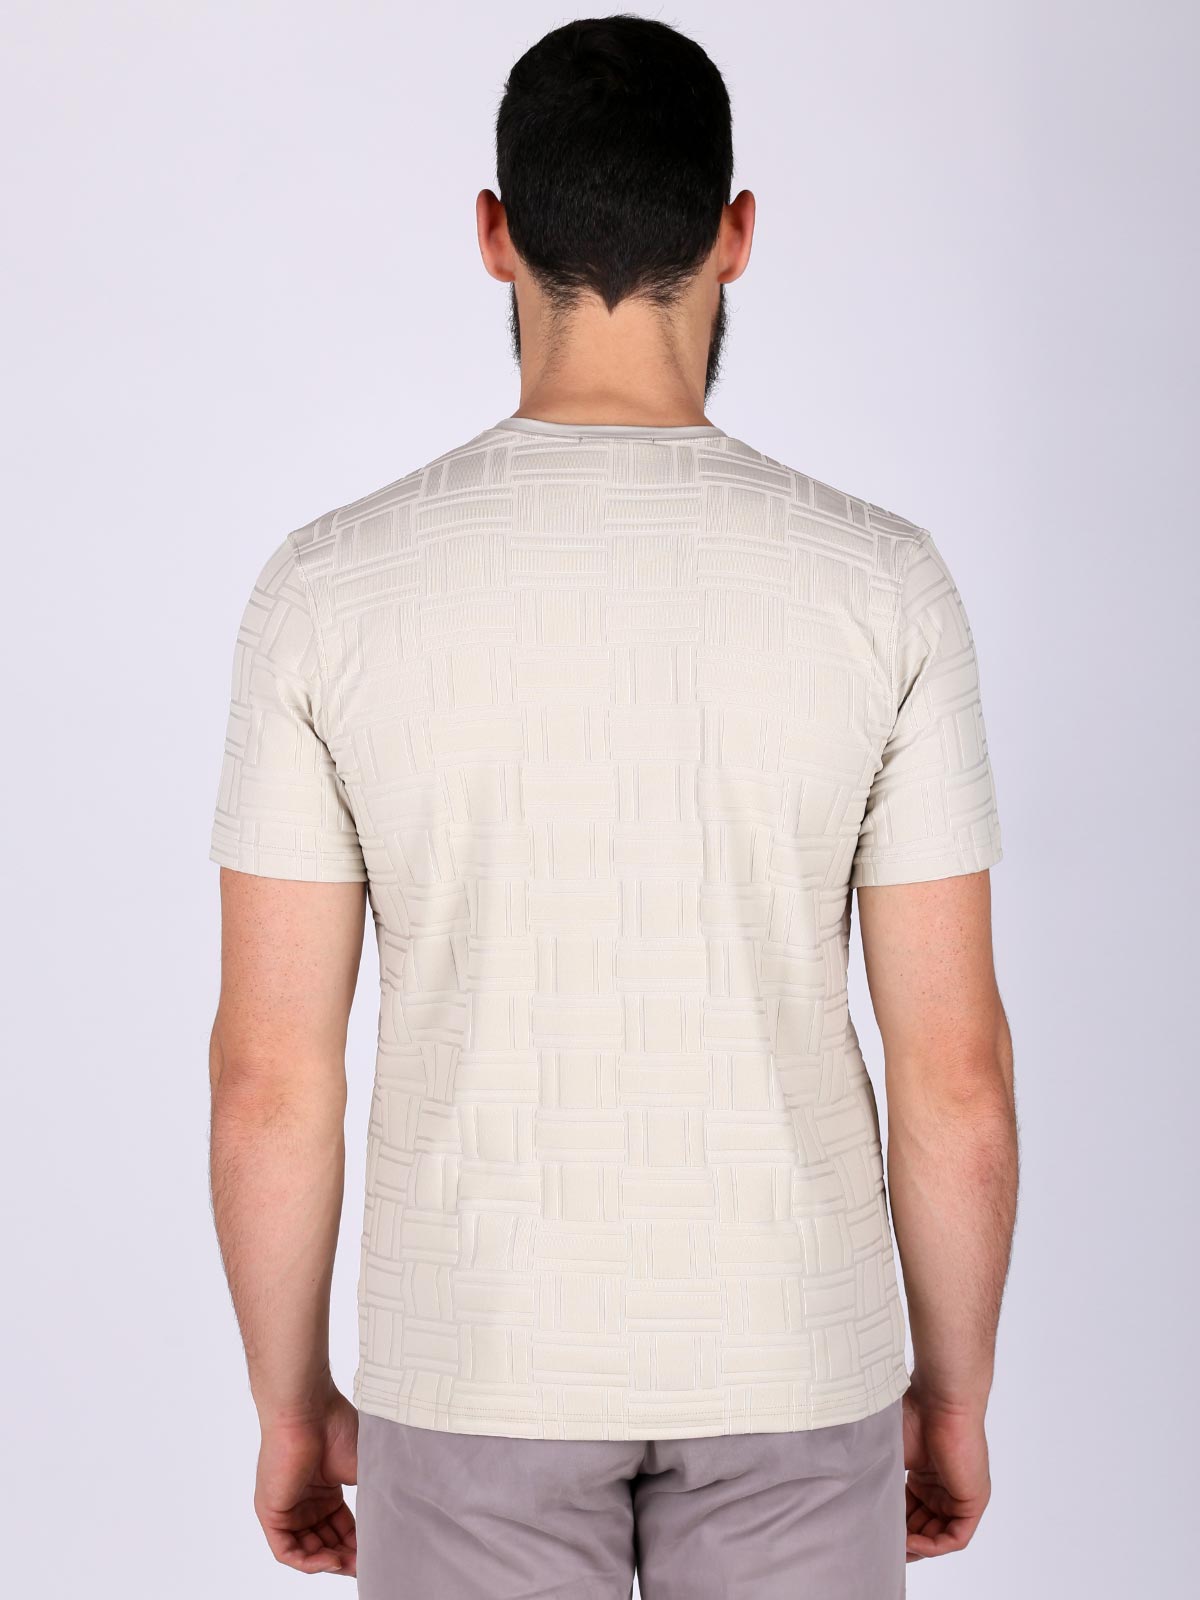  beige tshirt with embossed lines  - 88014 € 6.75 img2